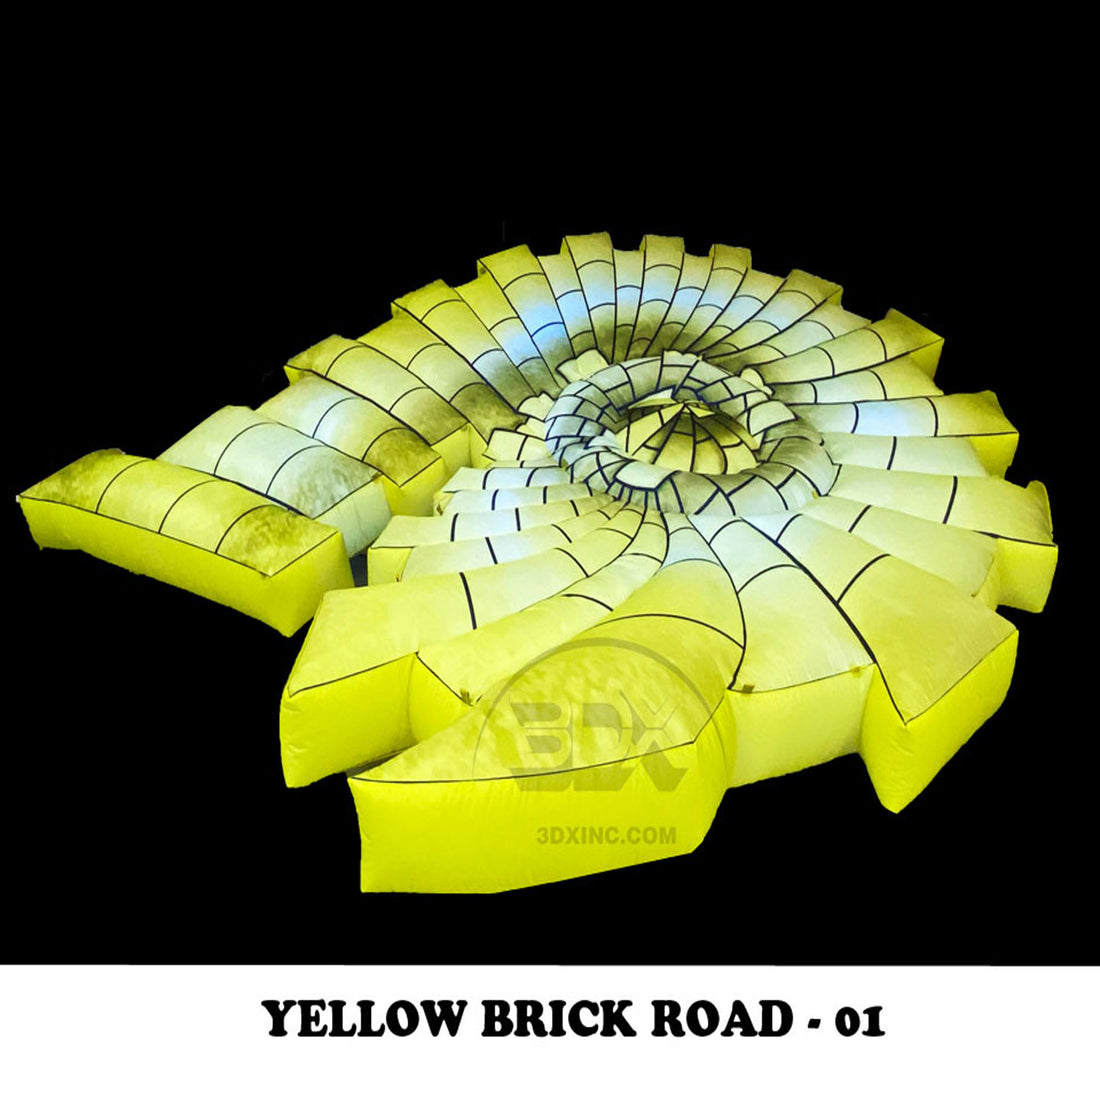 YELLOW BRICK ROAD - 01